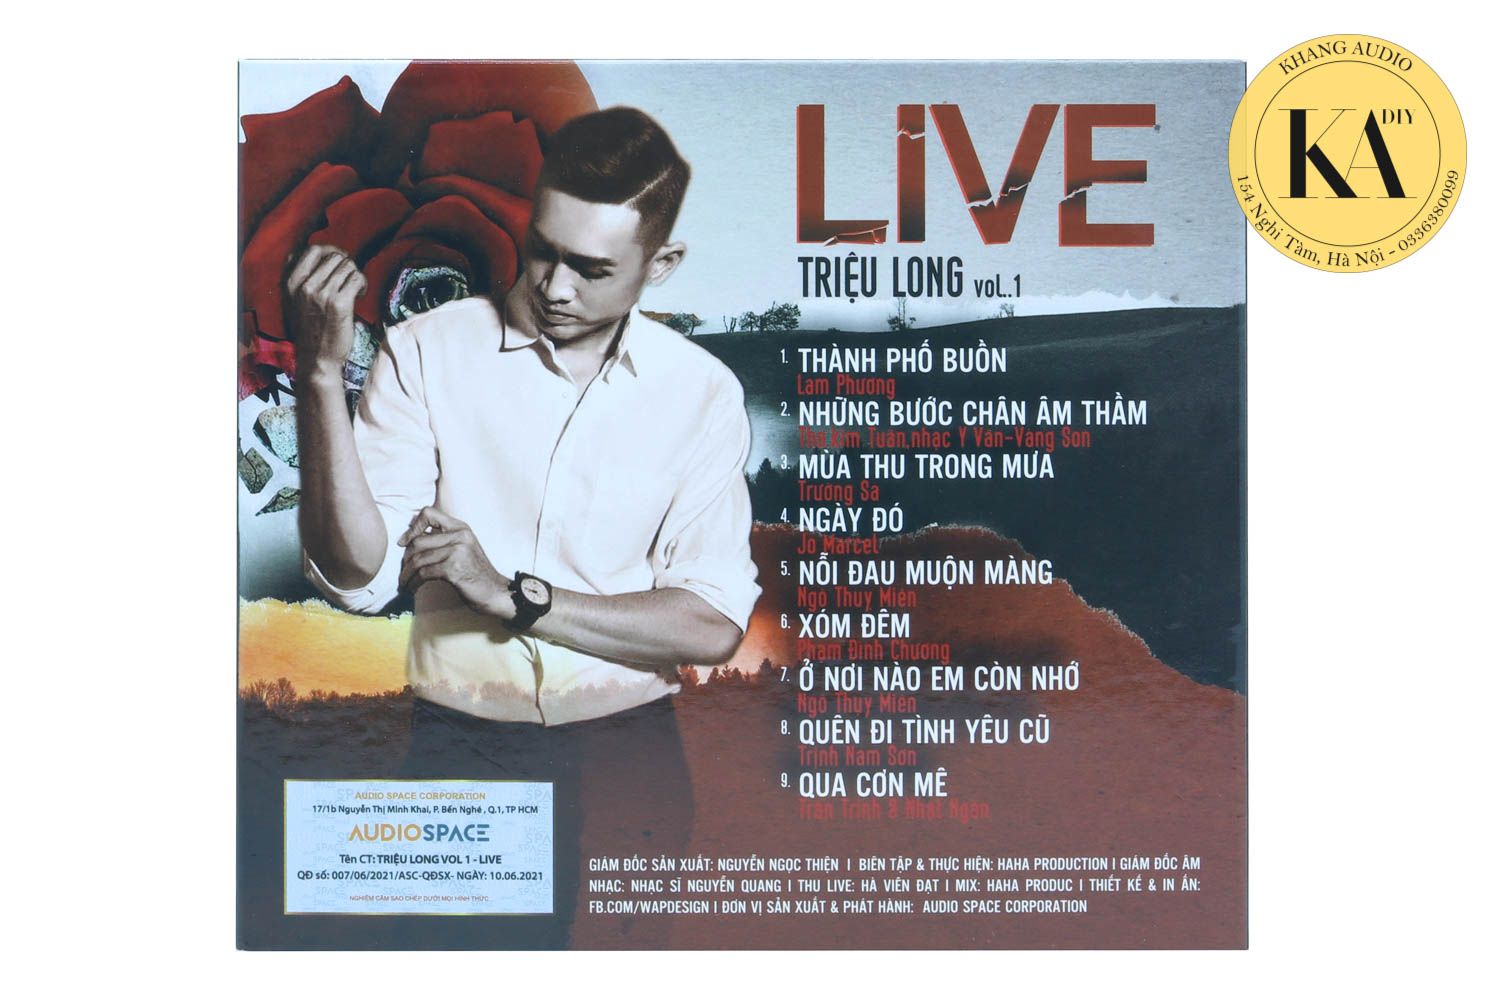 Live Triệu Long Vol.1 Khang Audio 0336380099